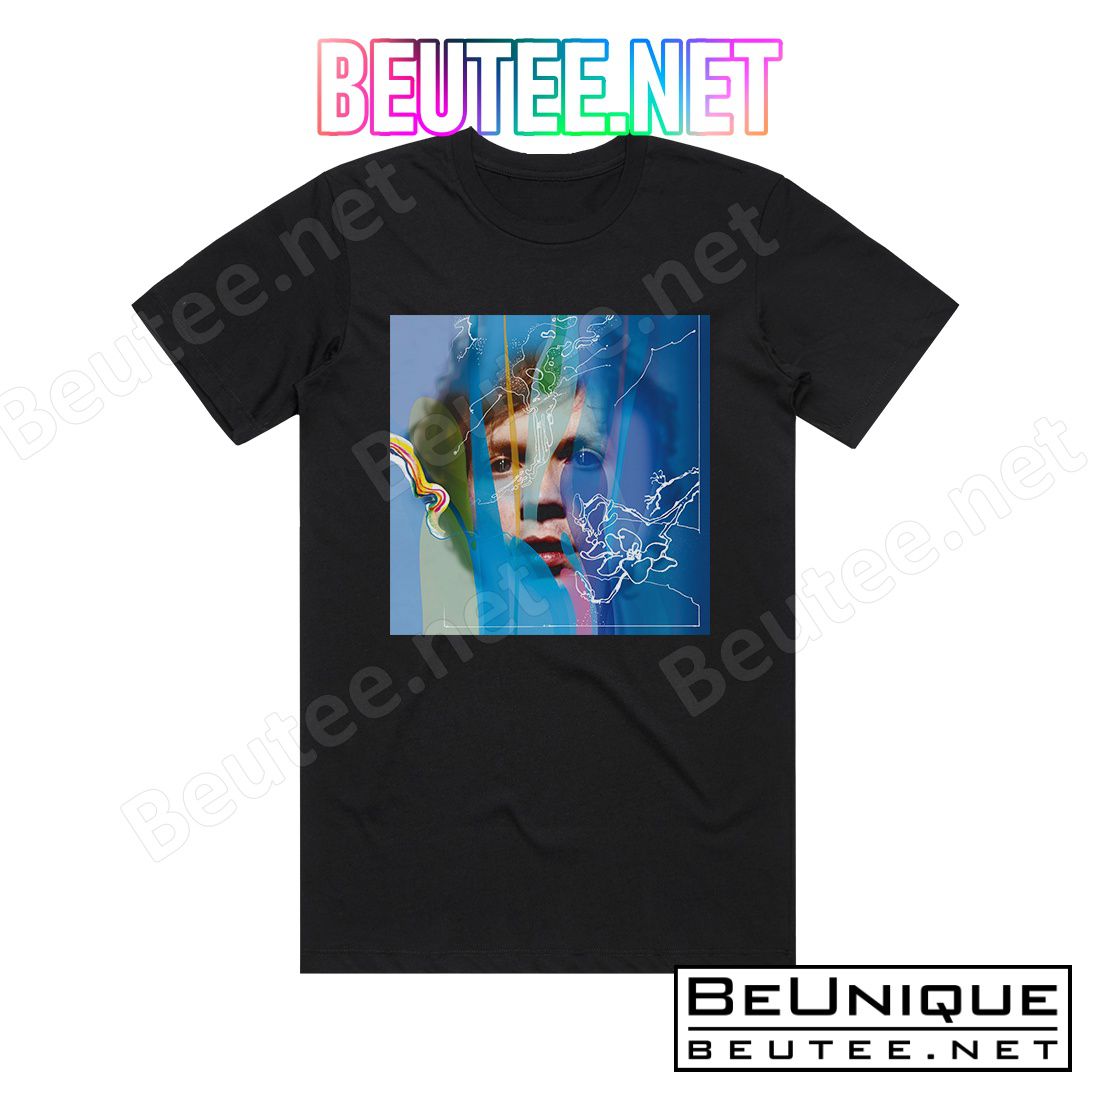 Beck Sea Change 2 Album Cover T-Shirt